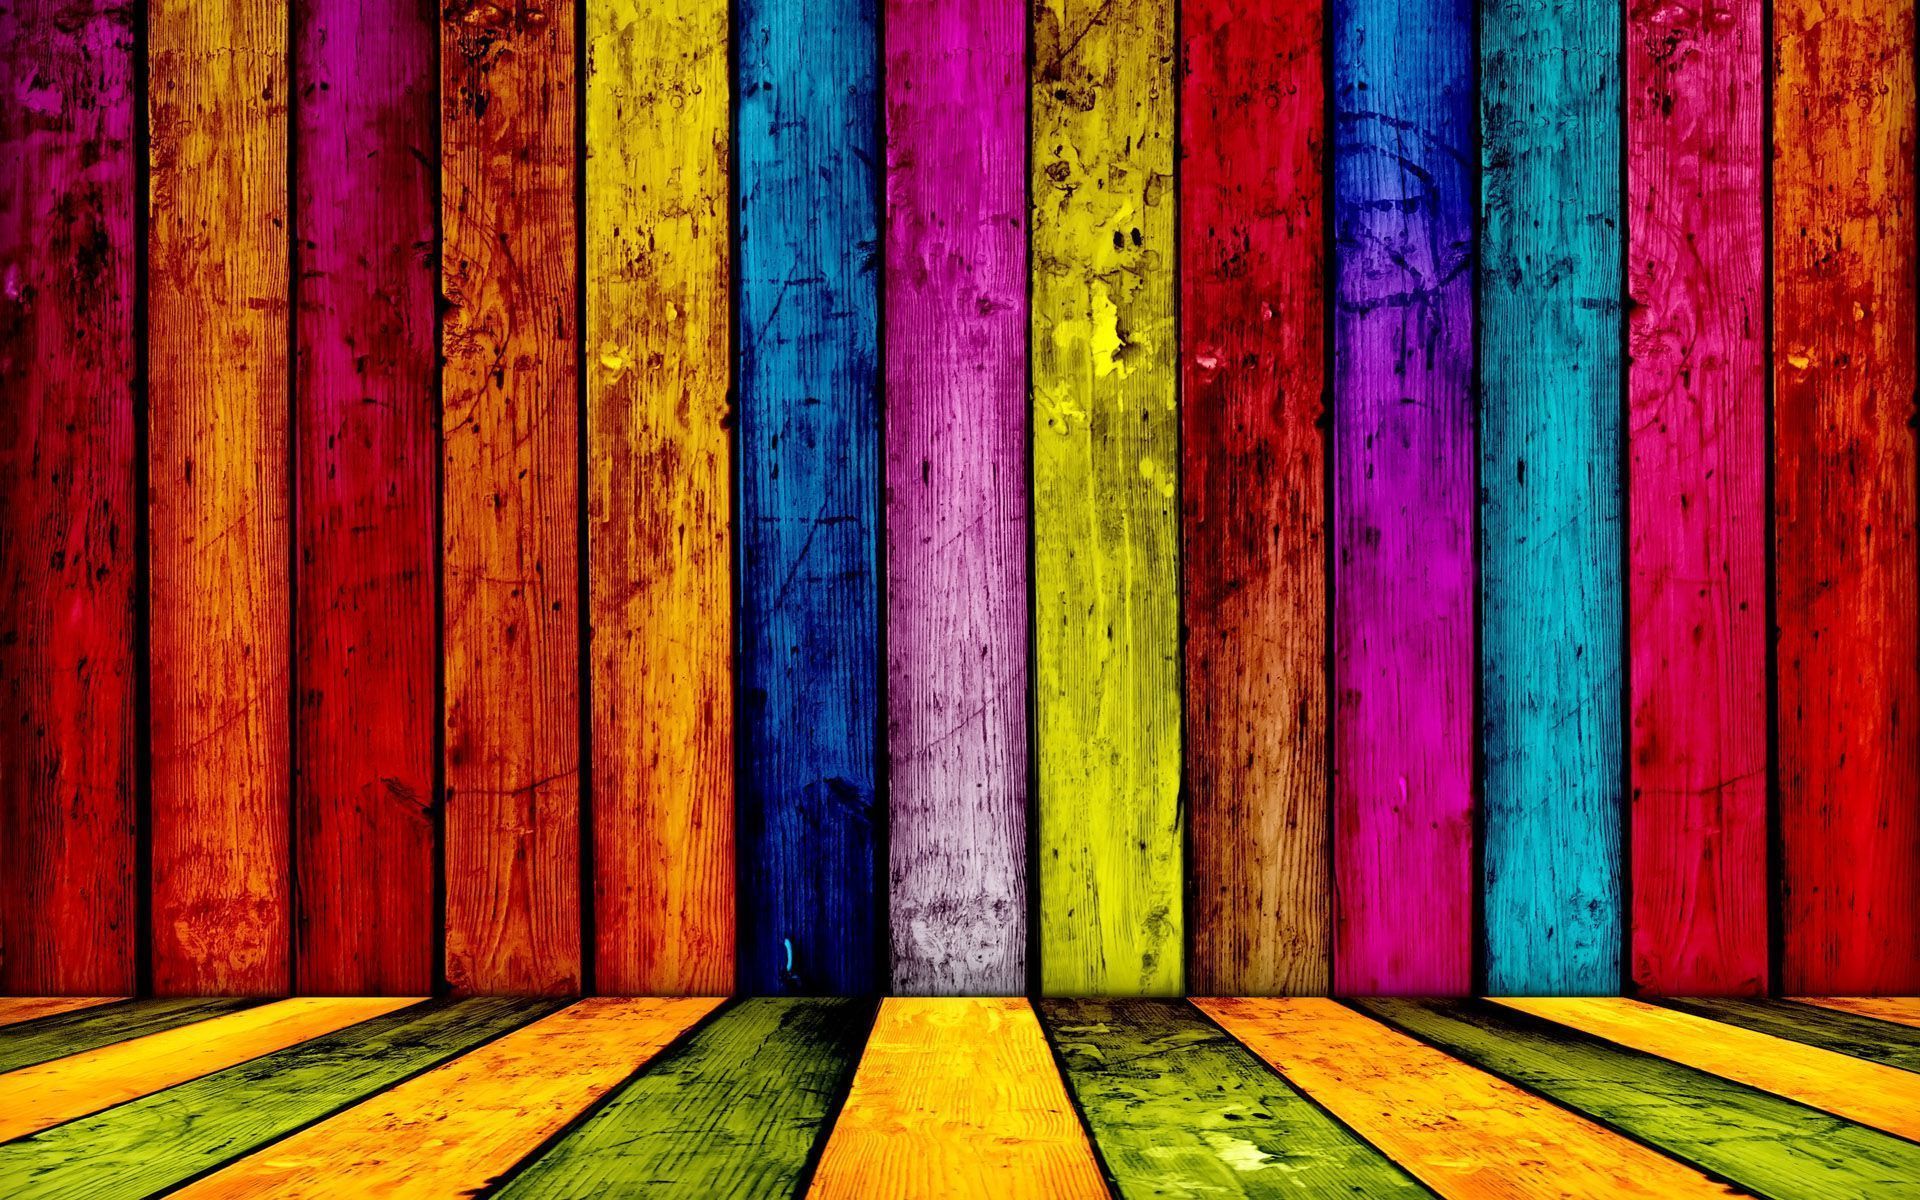 20 Beautiful Colorful Desktop Wallpaper HD Collections - Yoanu.com